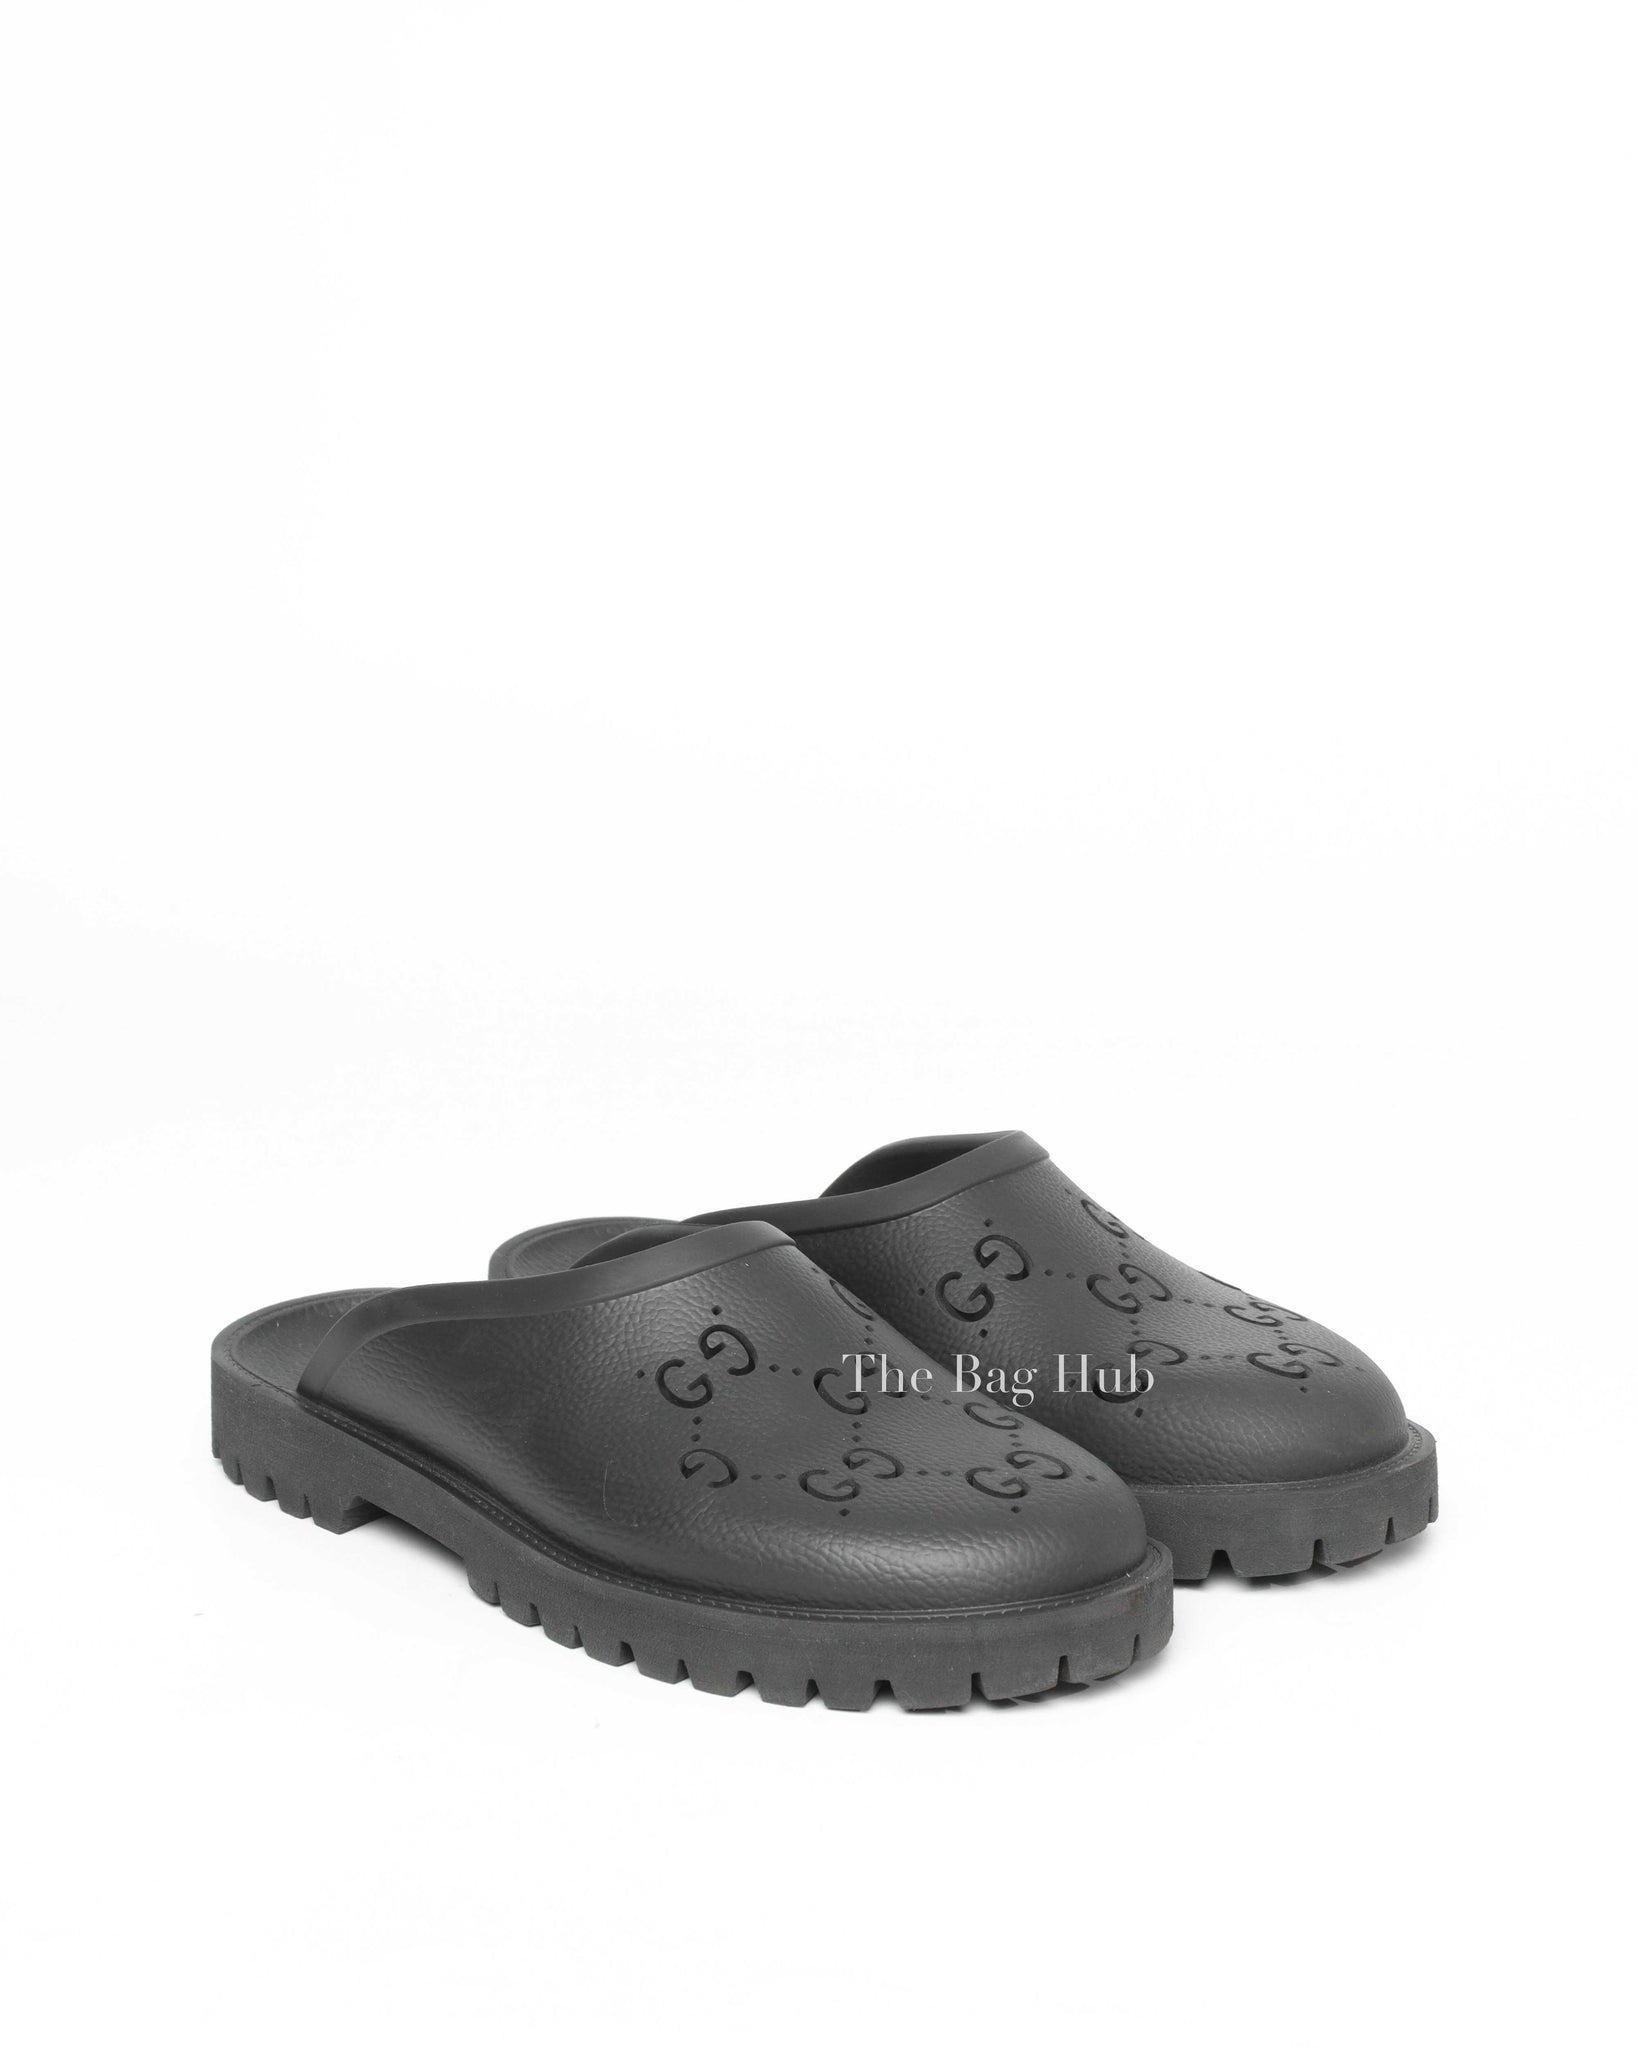 Gucci Black Rubber Men's Slip On Sandals Size 9-2